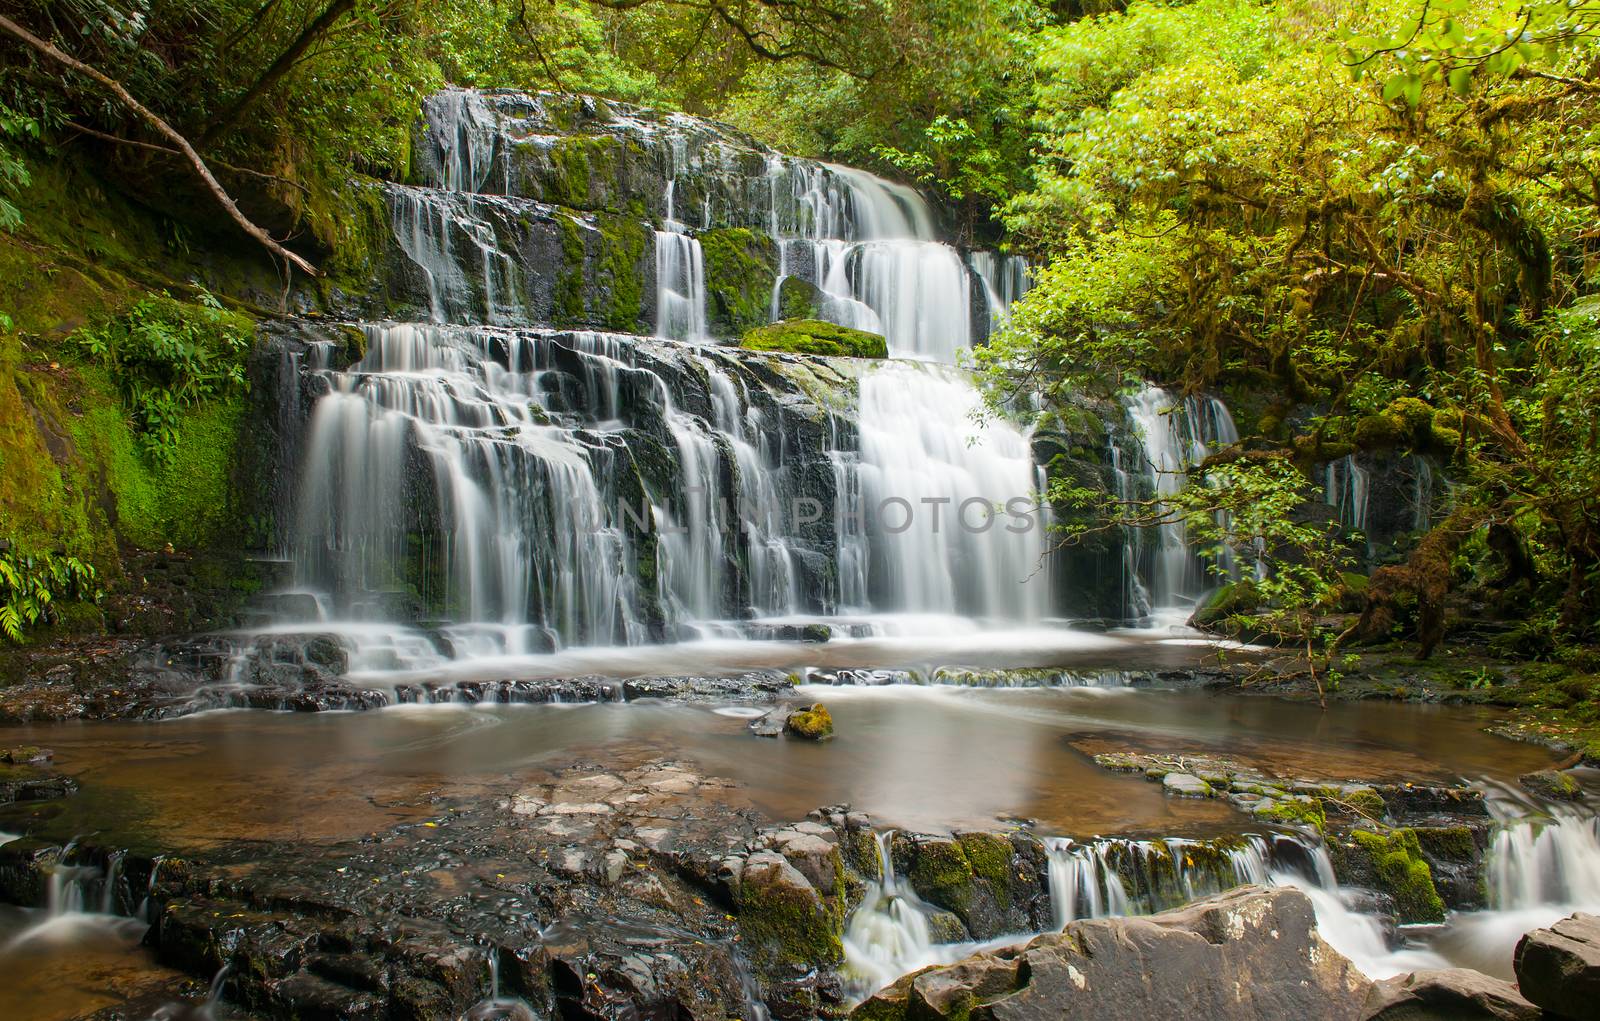 Purakaunui Falls is a beautiful small waterfall on the Catlins (South of the Southern island), New Zealand